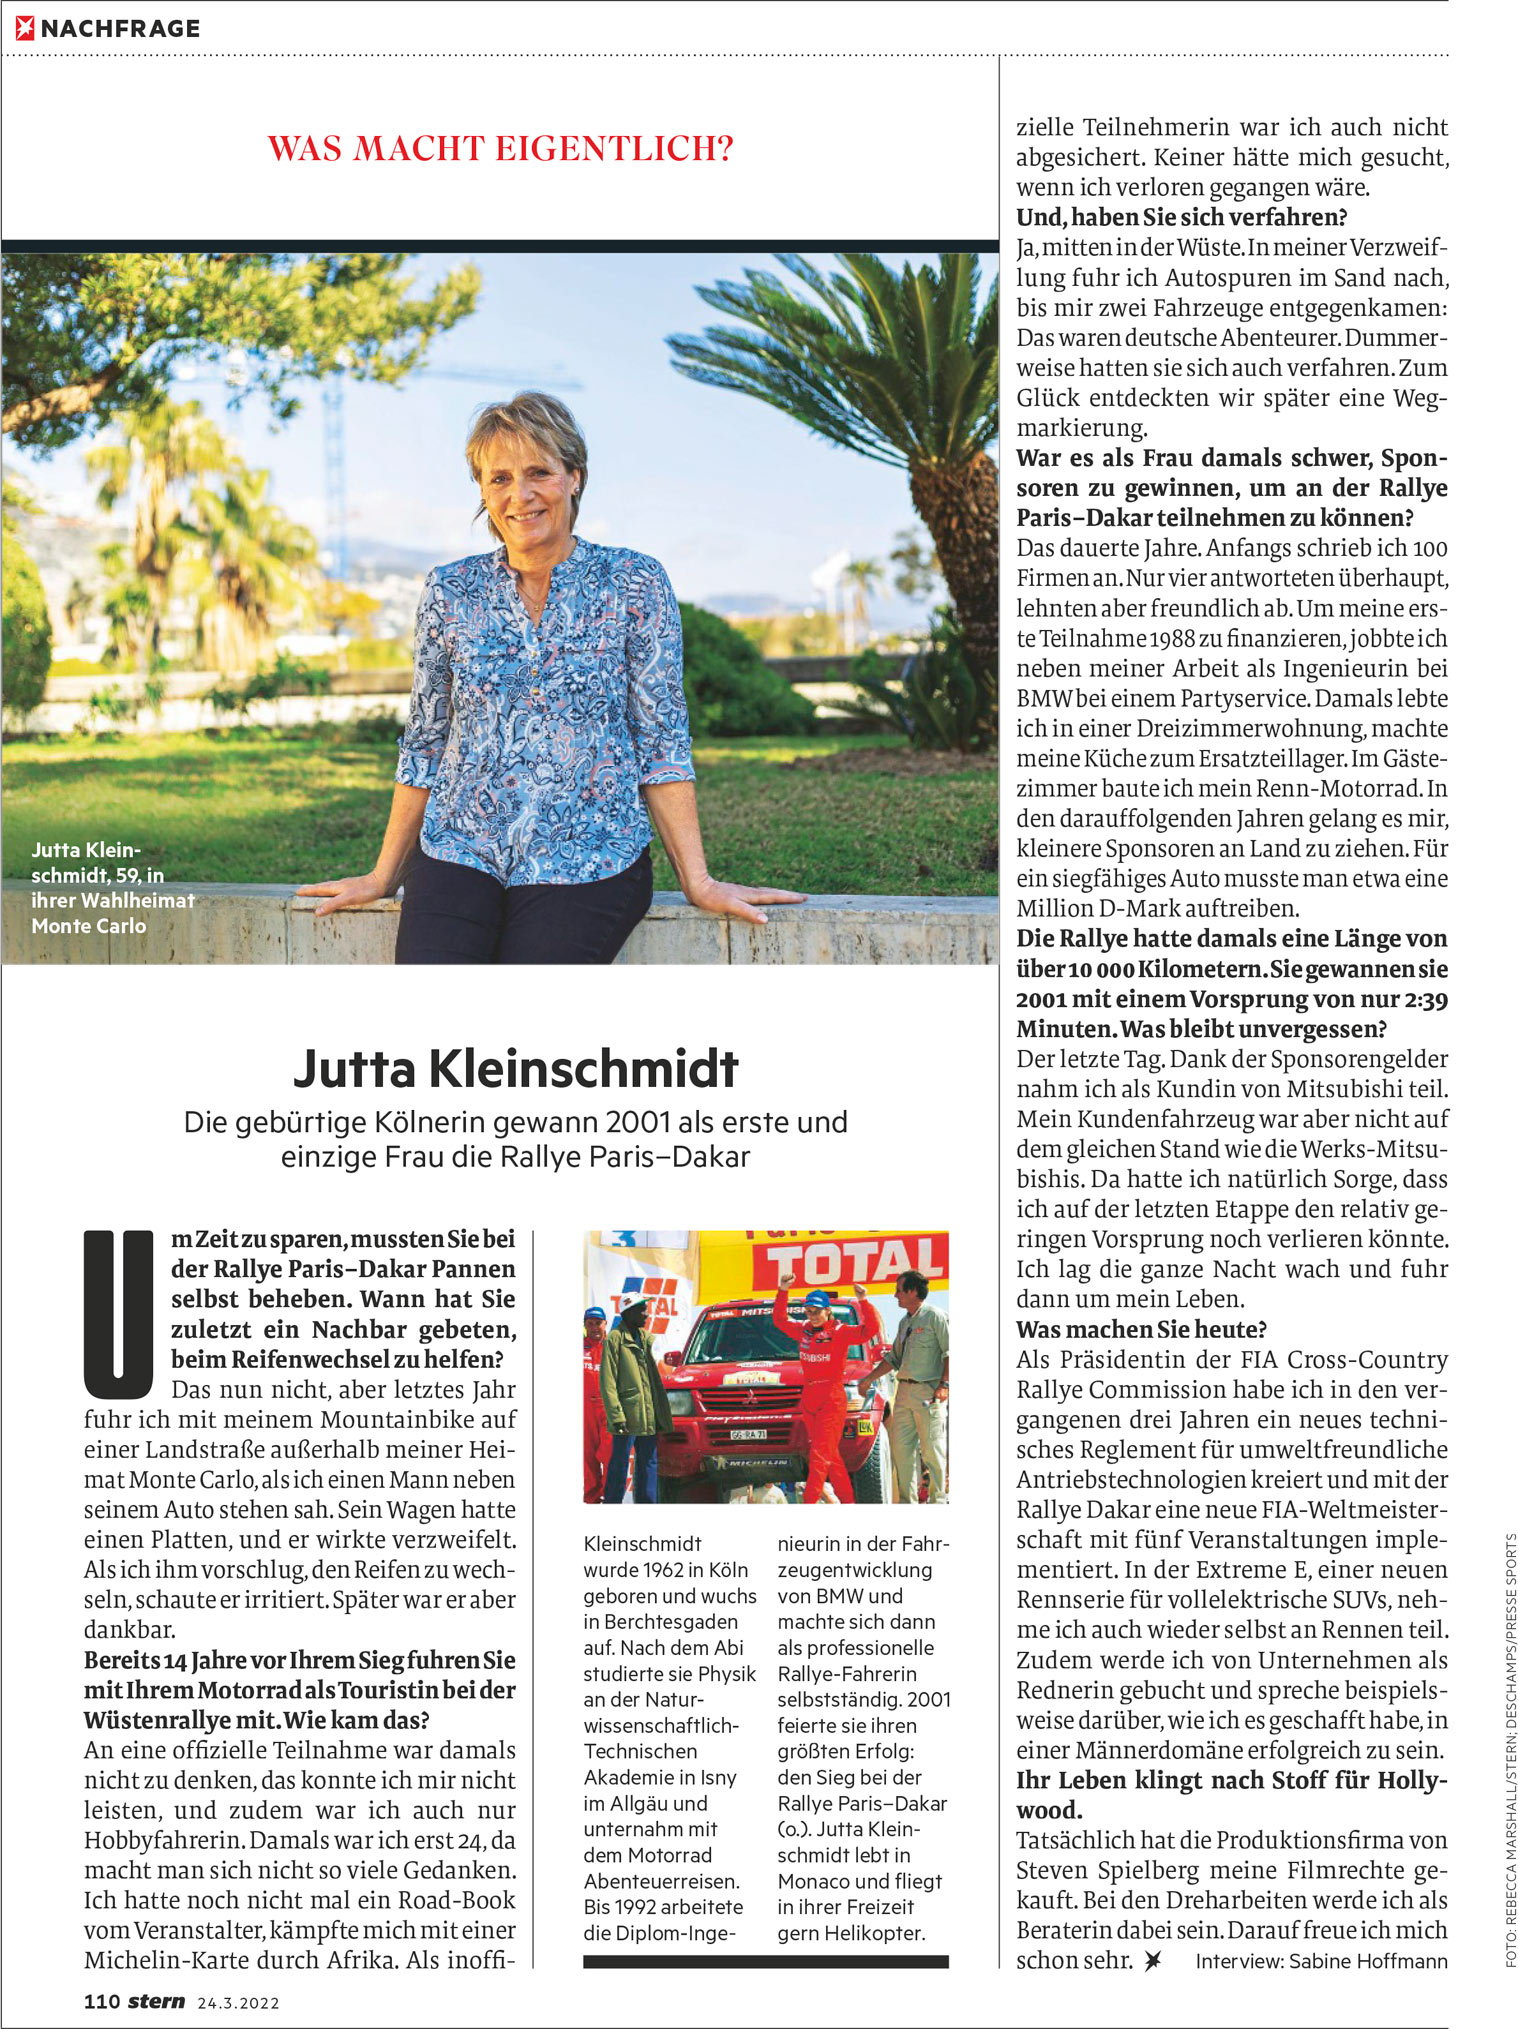 Tearsheet from Stern magazine showing portrait of Jutta Kleinschmidt and text